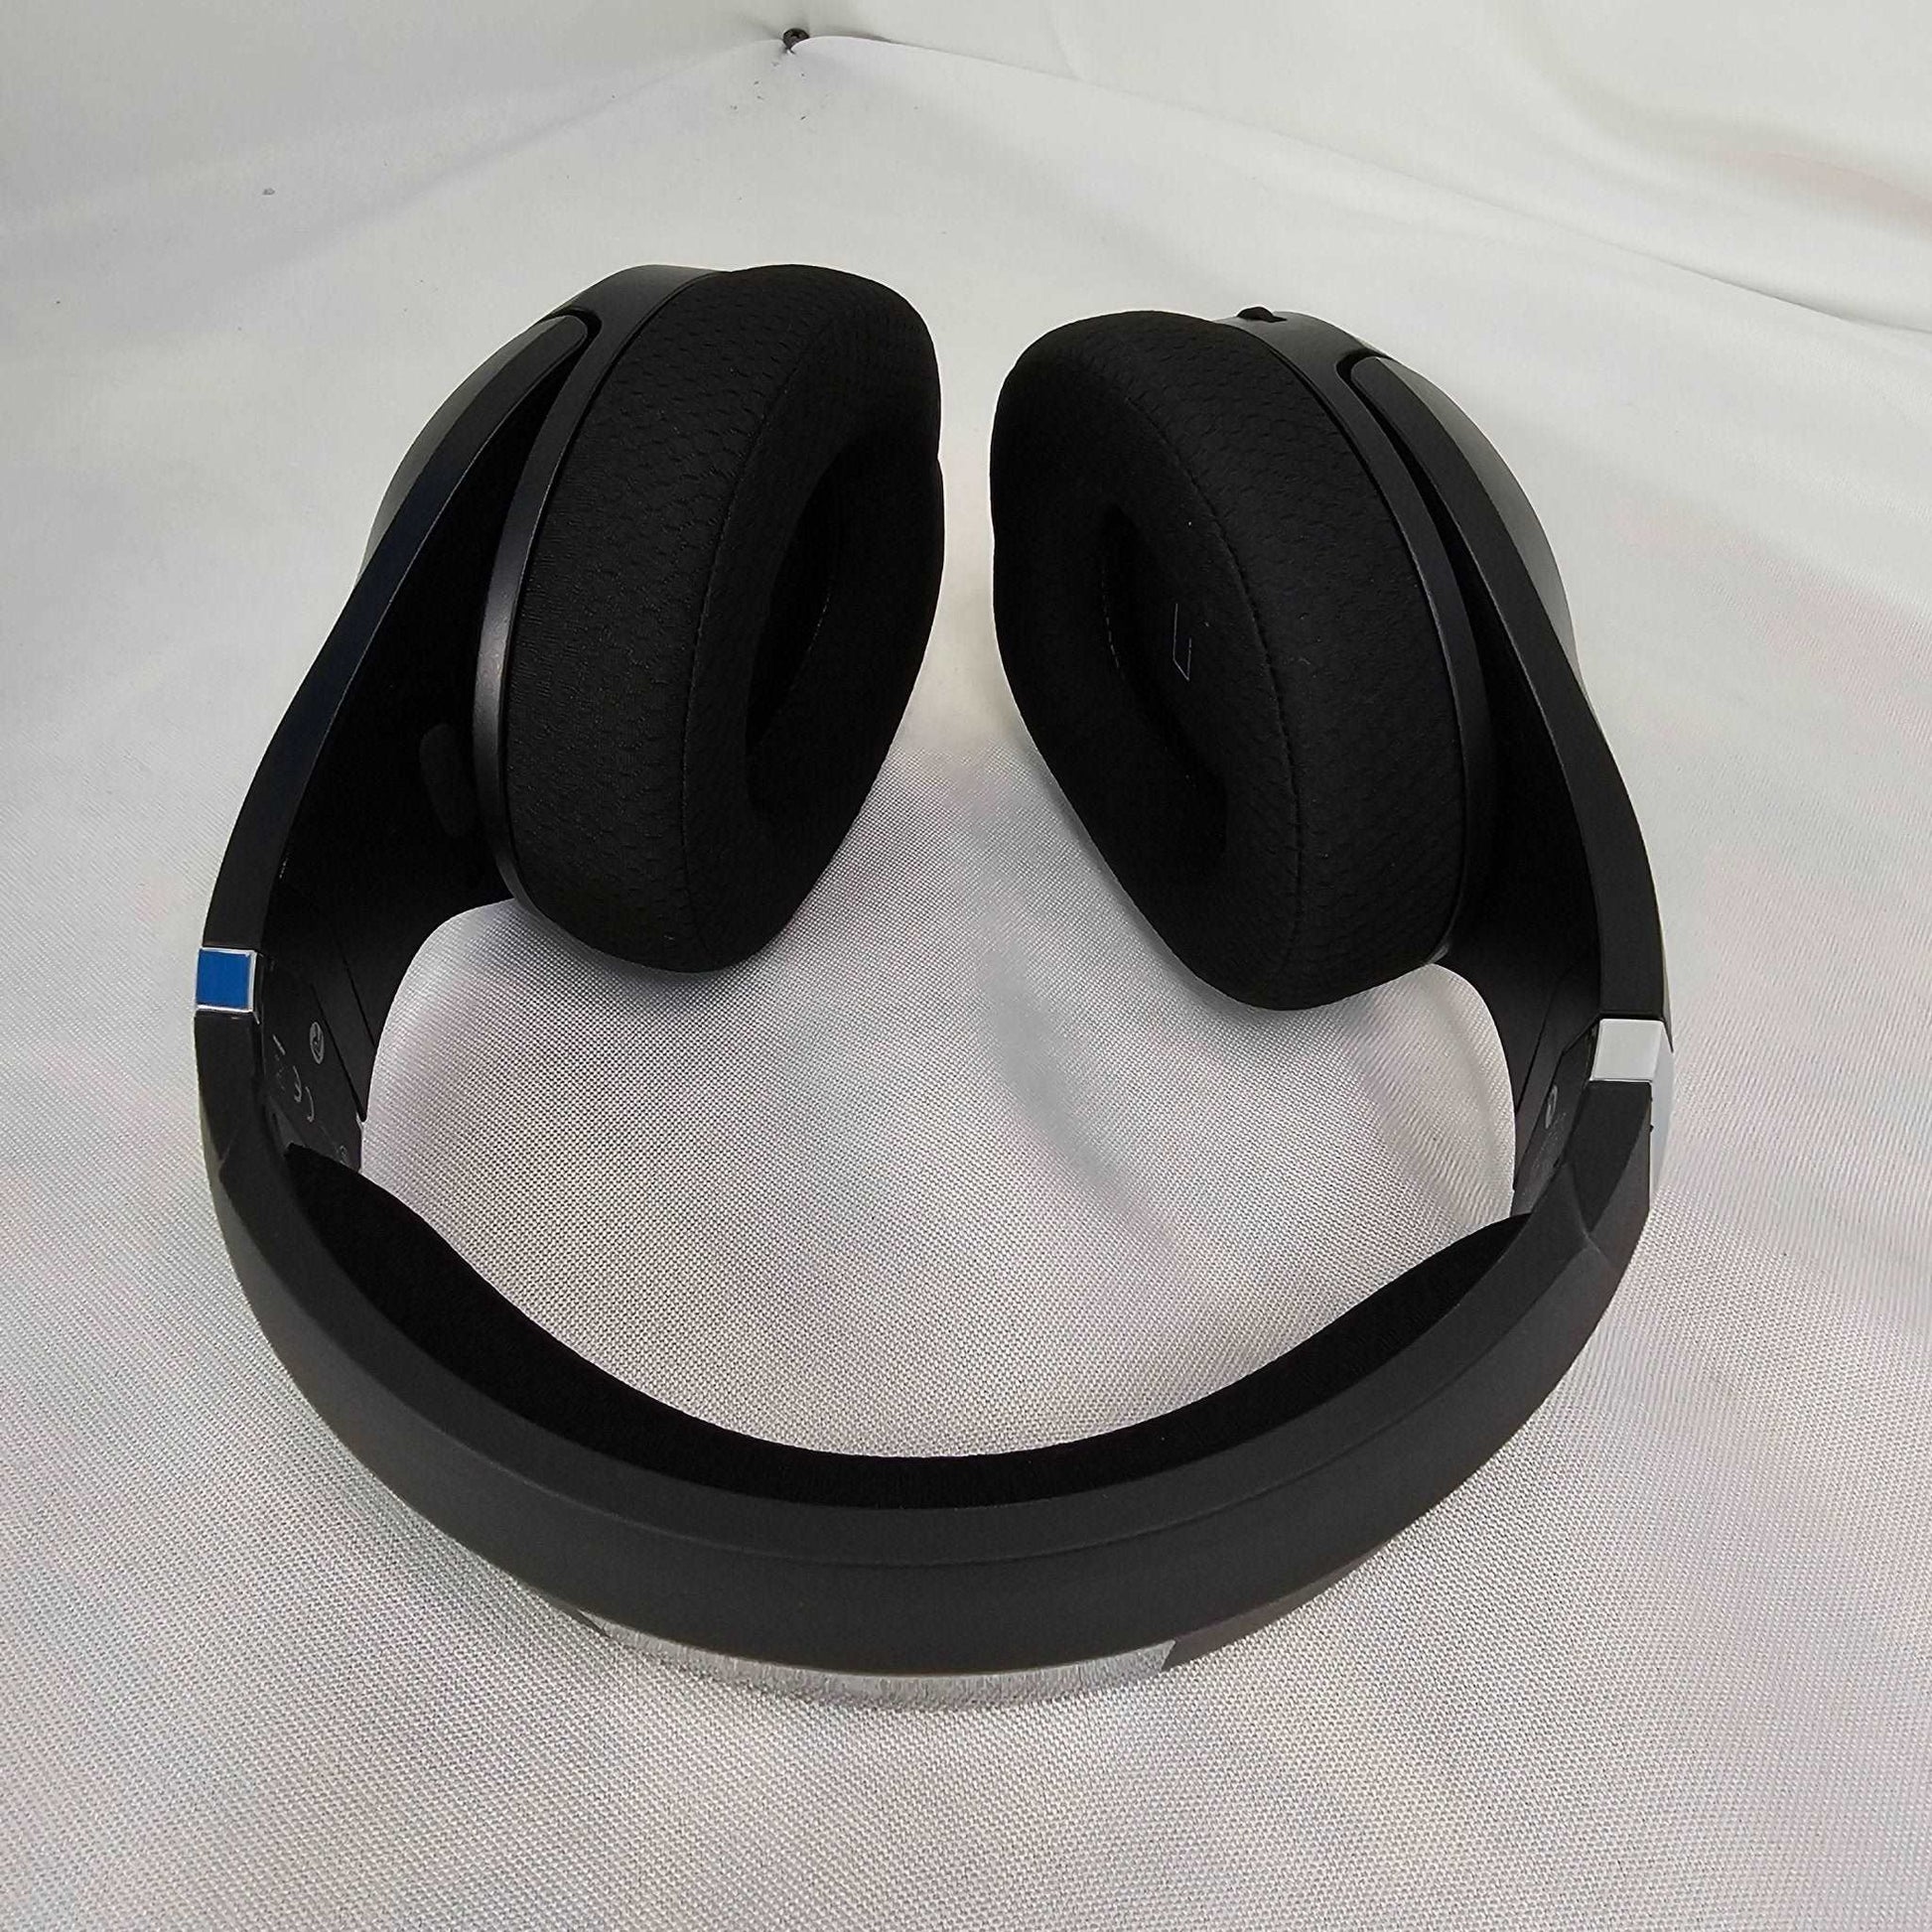 Gaming Headset Black/Blue Kapeydesi Captain 400 - DQ Distribution